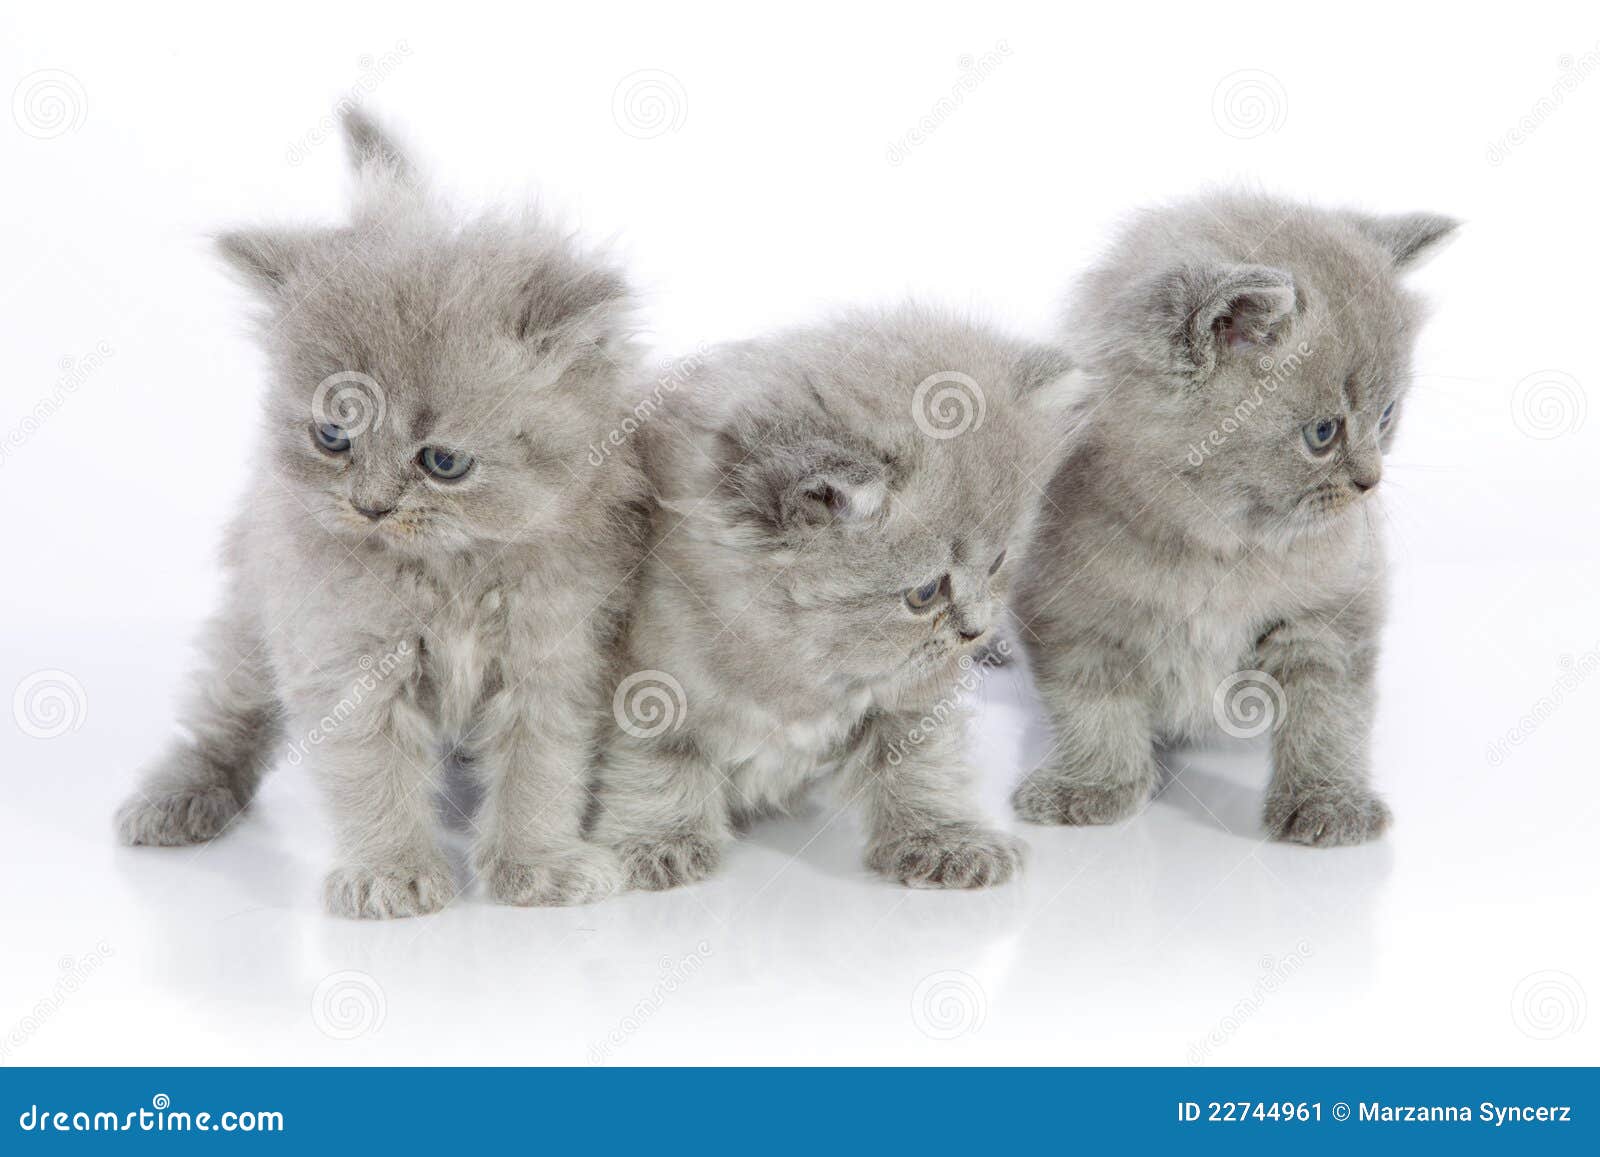 Three Cute Kittens Stock Image - Image: 22744961